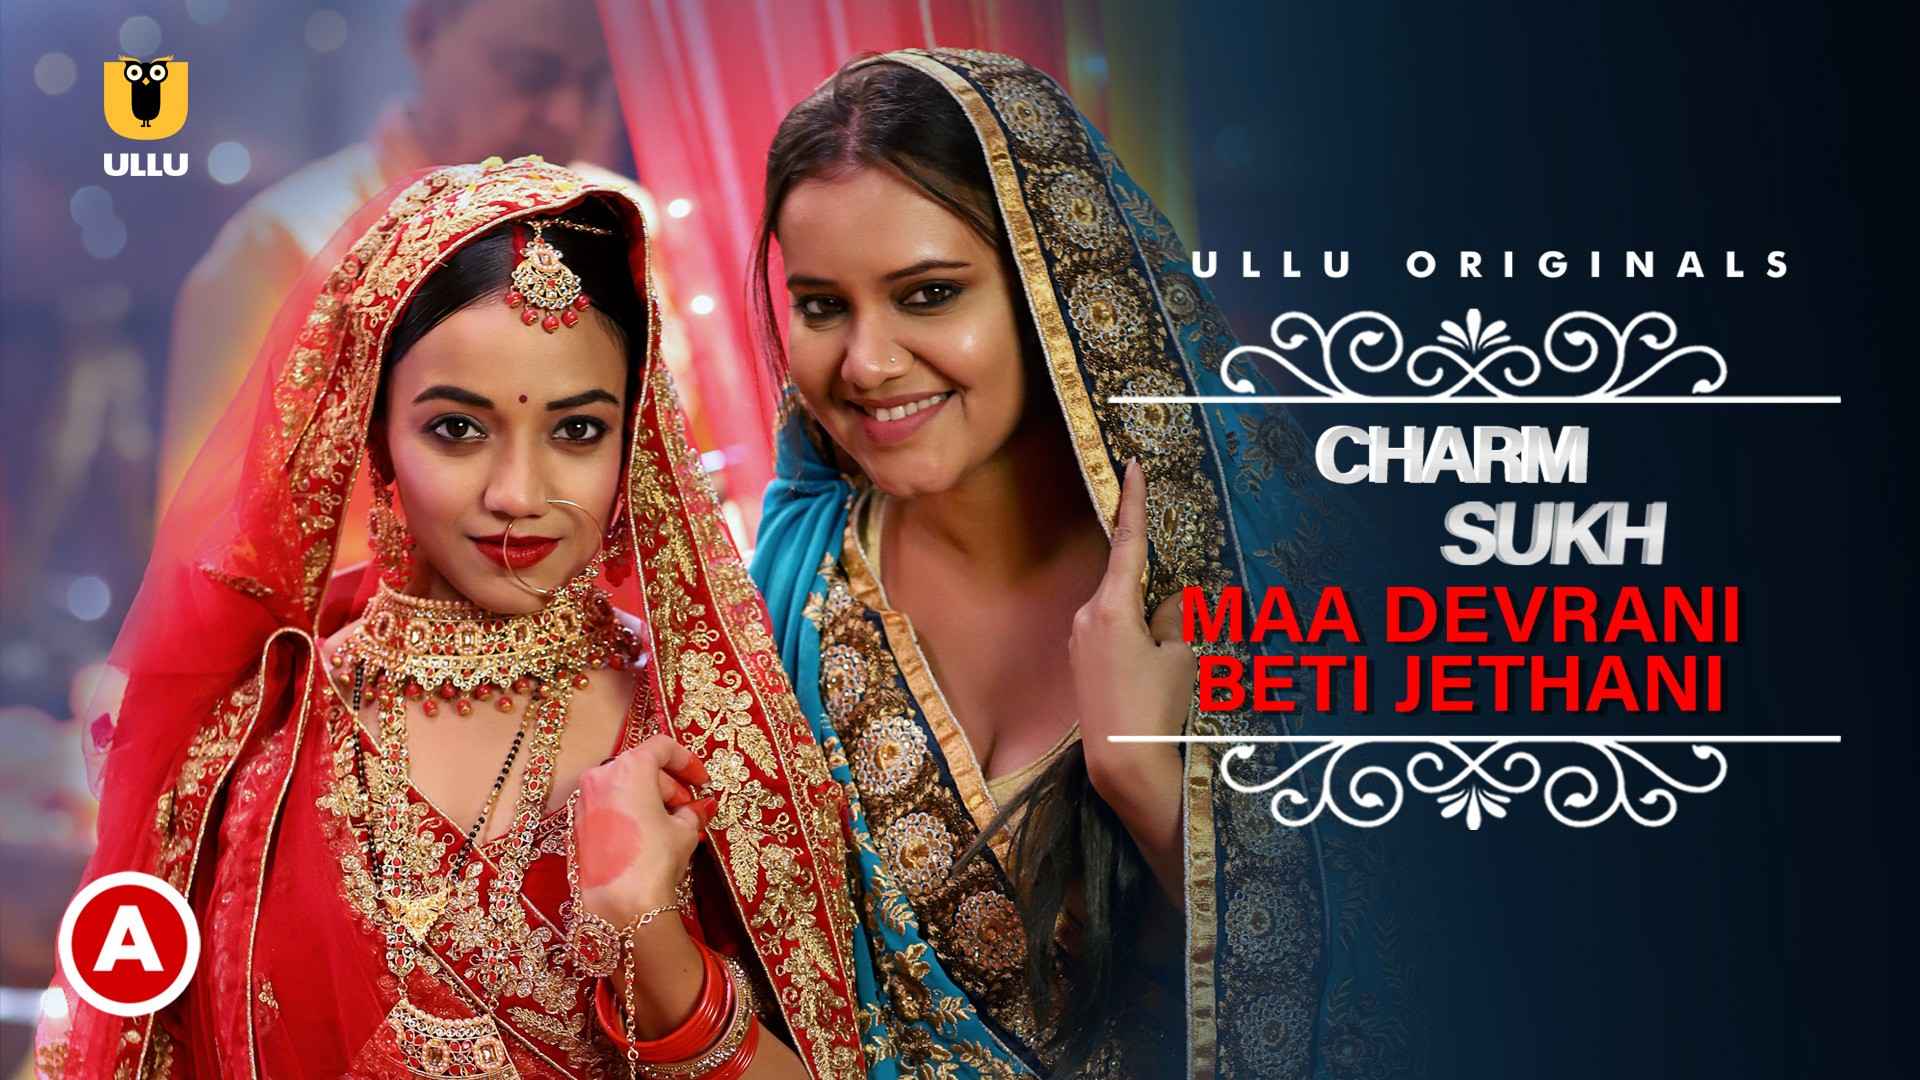 Charmsukh Maa Devrani Beti Jethani (Part 1) (2022) UllU Original Hindi Web Series Watch Online